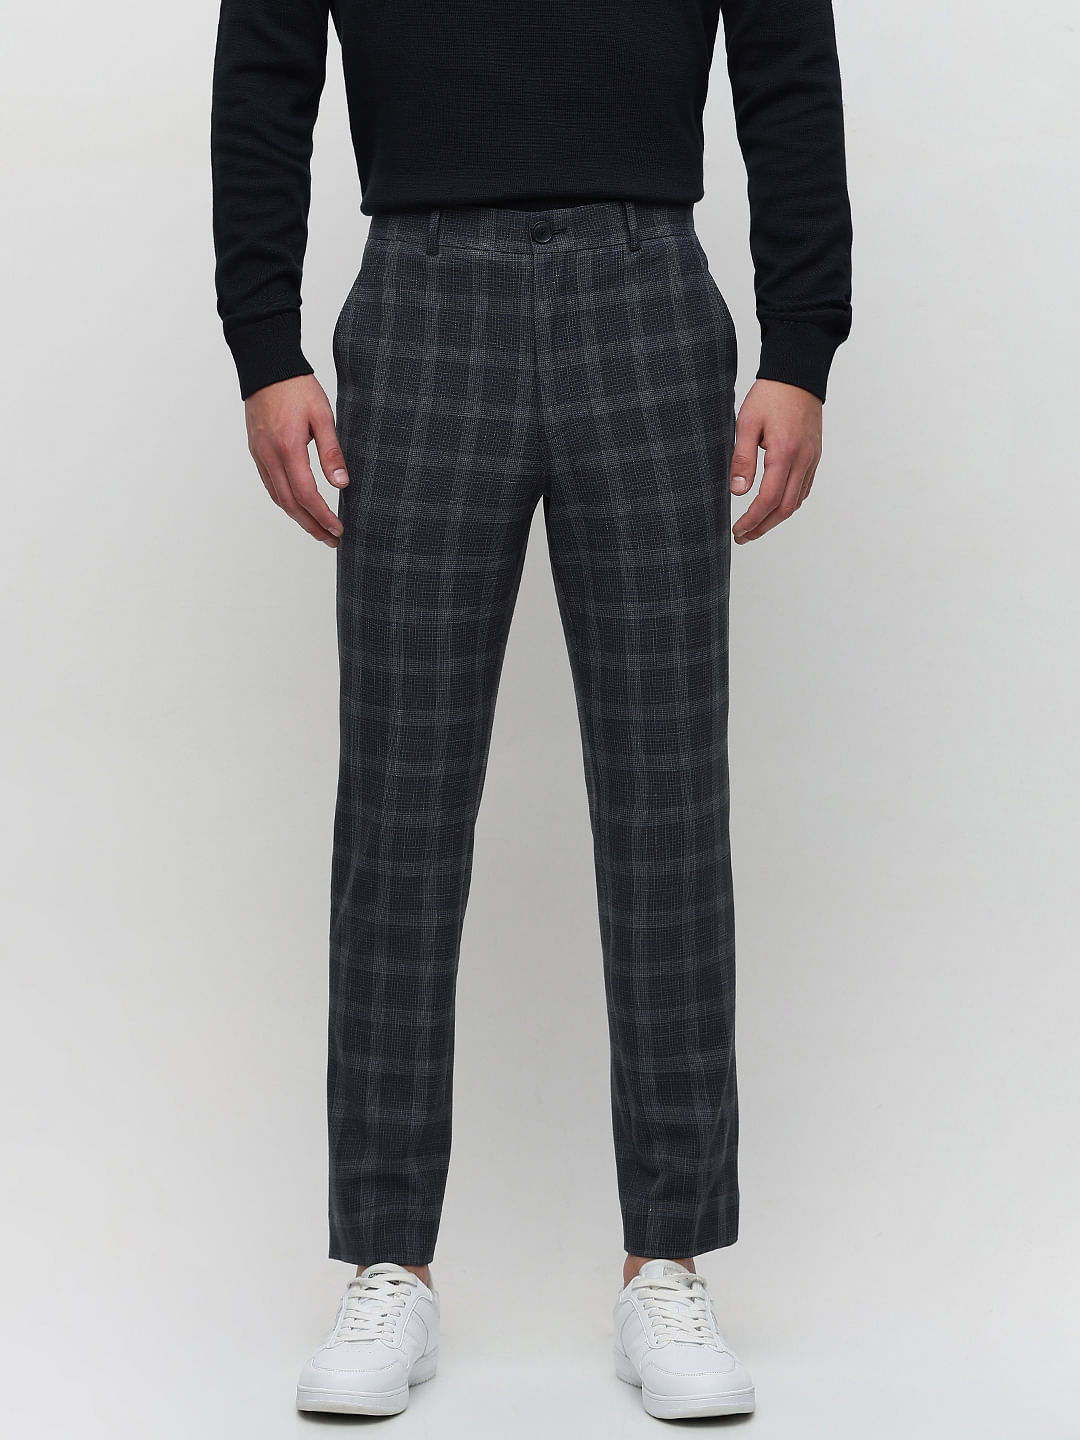 Cloud Gray Checks-Plaid Premium wool blend Pant For Men